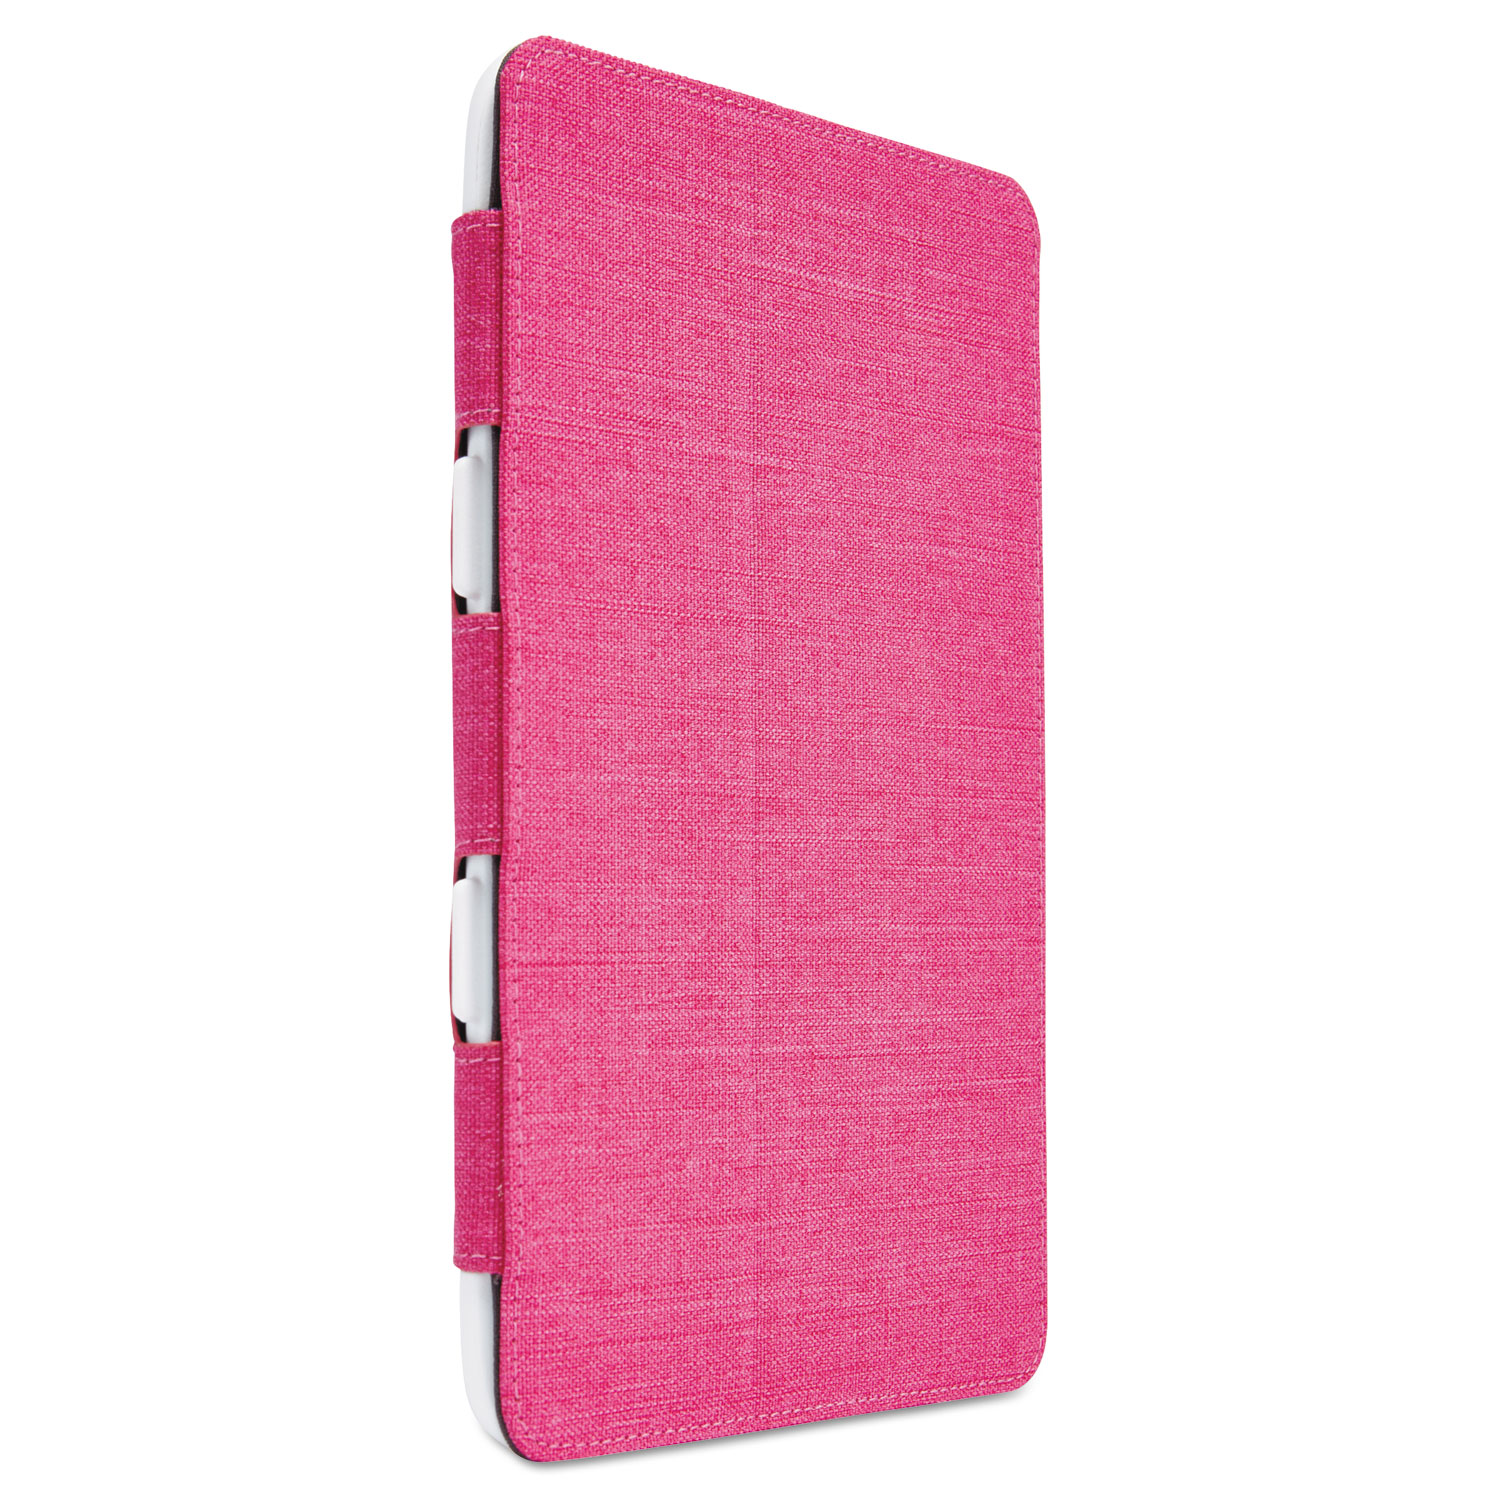 SnapView Folio for iPad mini, 5 5/8 x 3/4 x 8 1/8, Pink